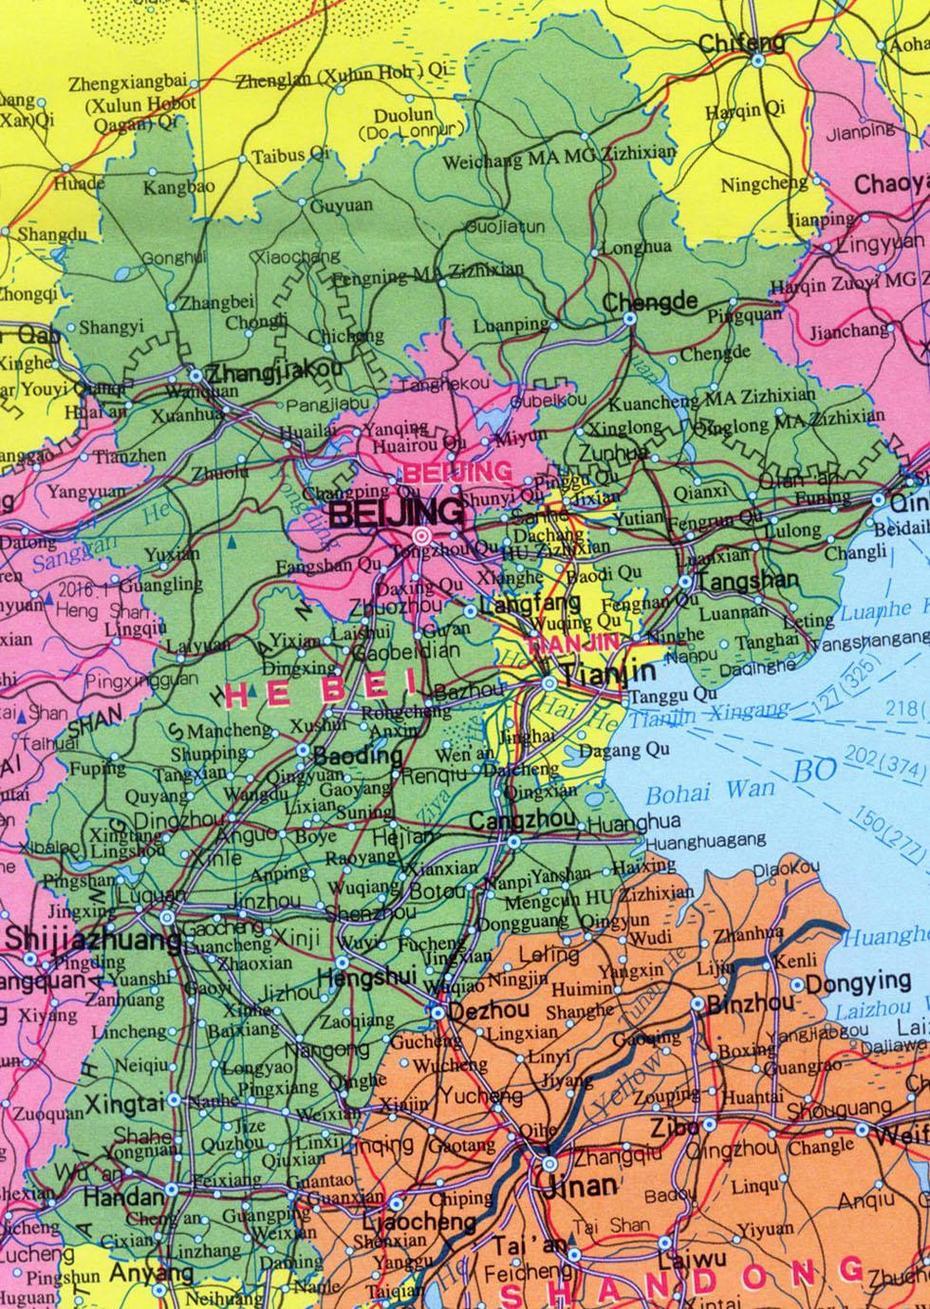 Hebei Province Map, China – Full Size | Gifex, Hebi, China, Hubei, Liaoning China